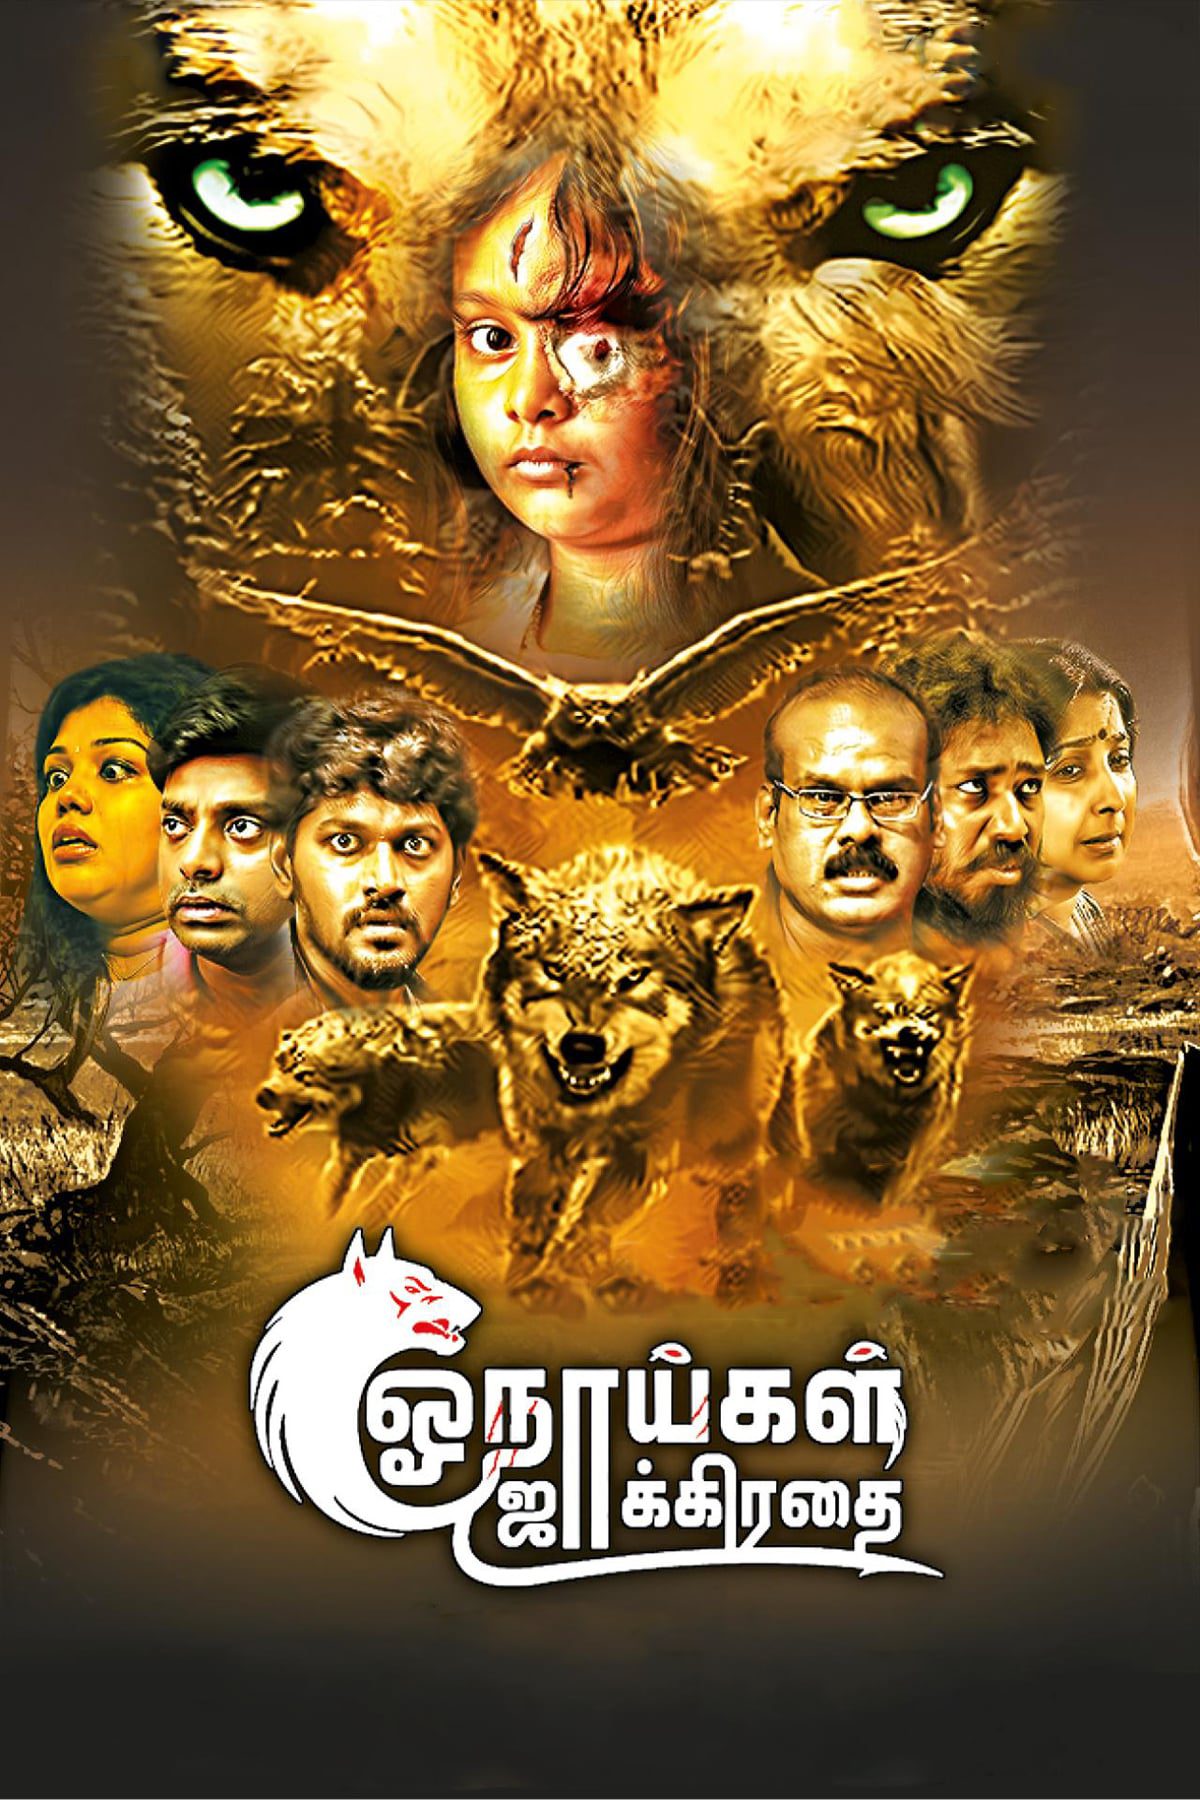 Poster for the movie "Onaaigal Jakkiradhai"